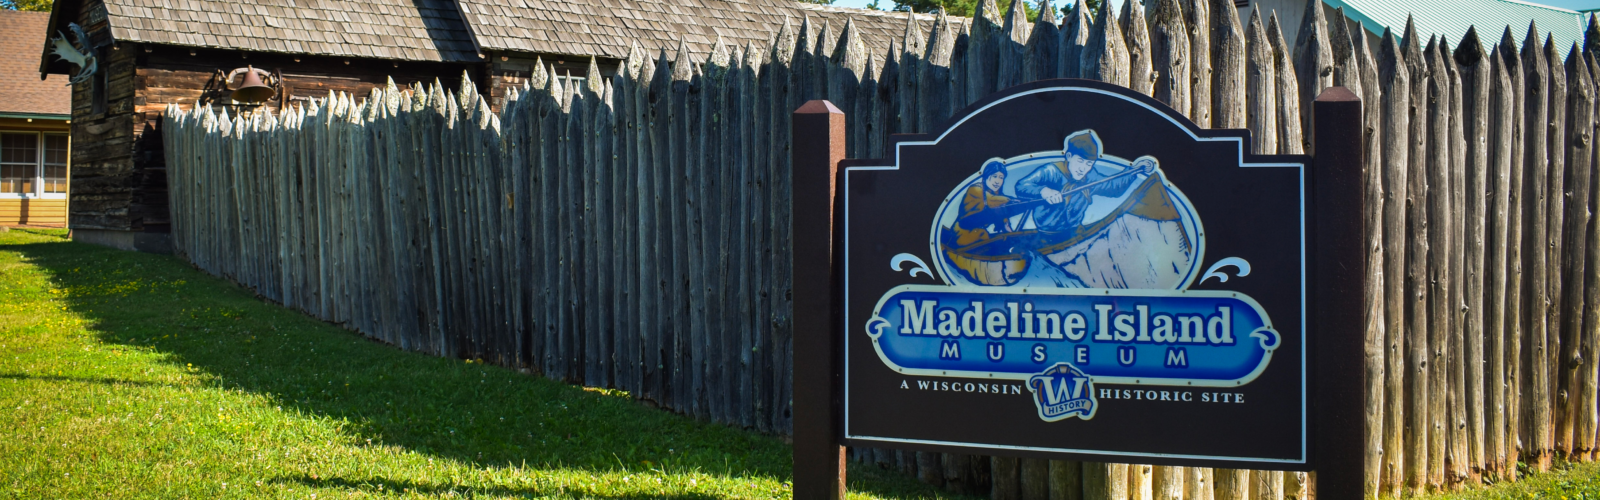 Madeline Island Museum